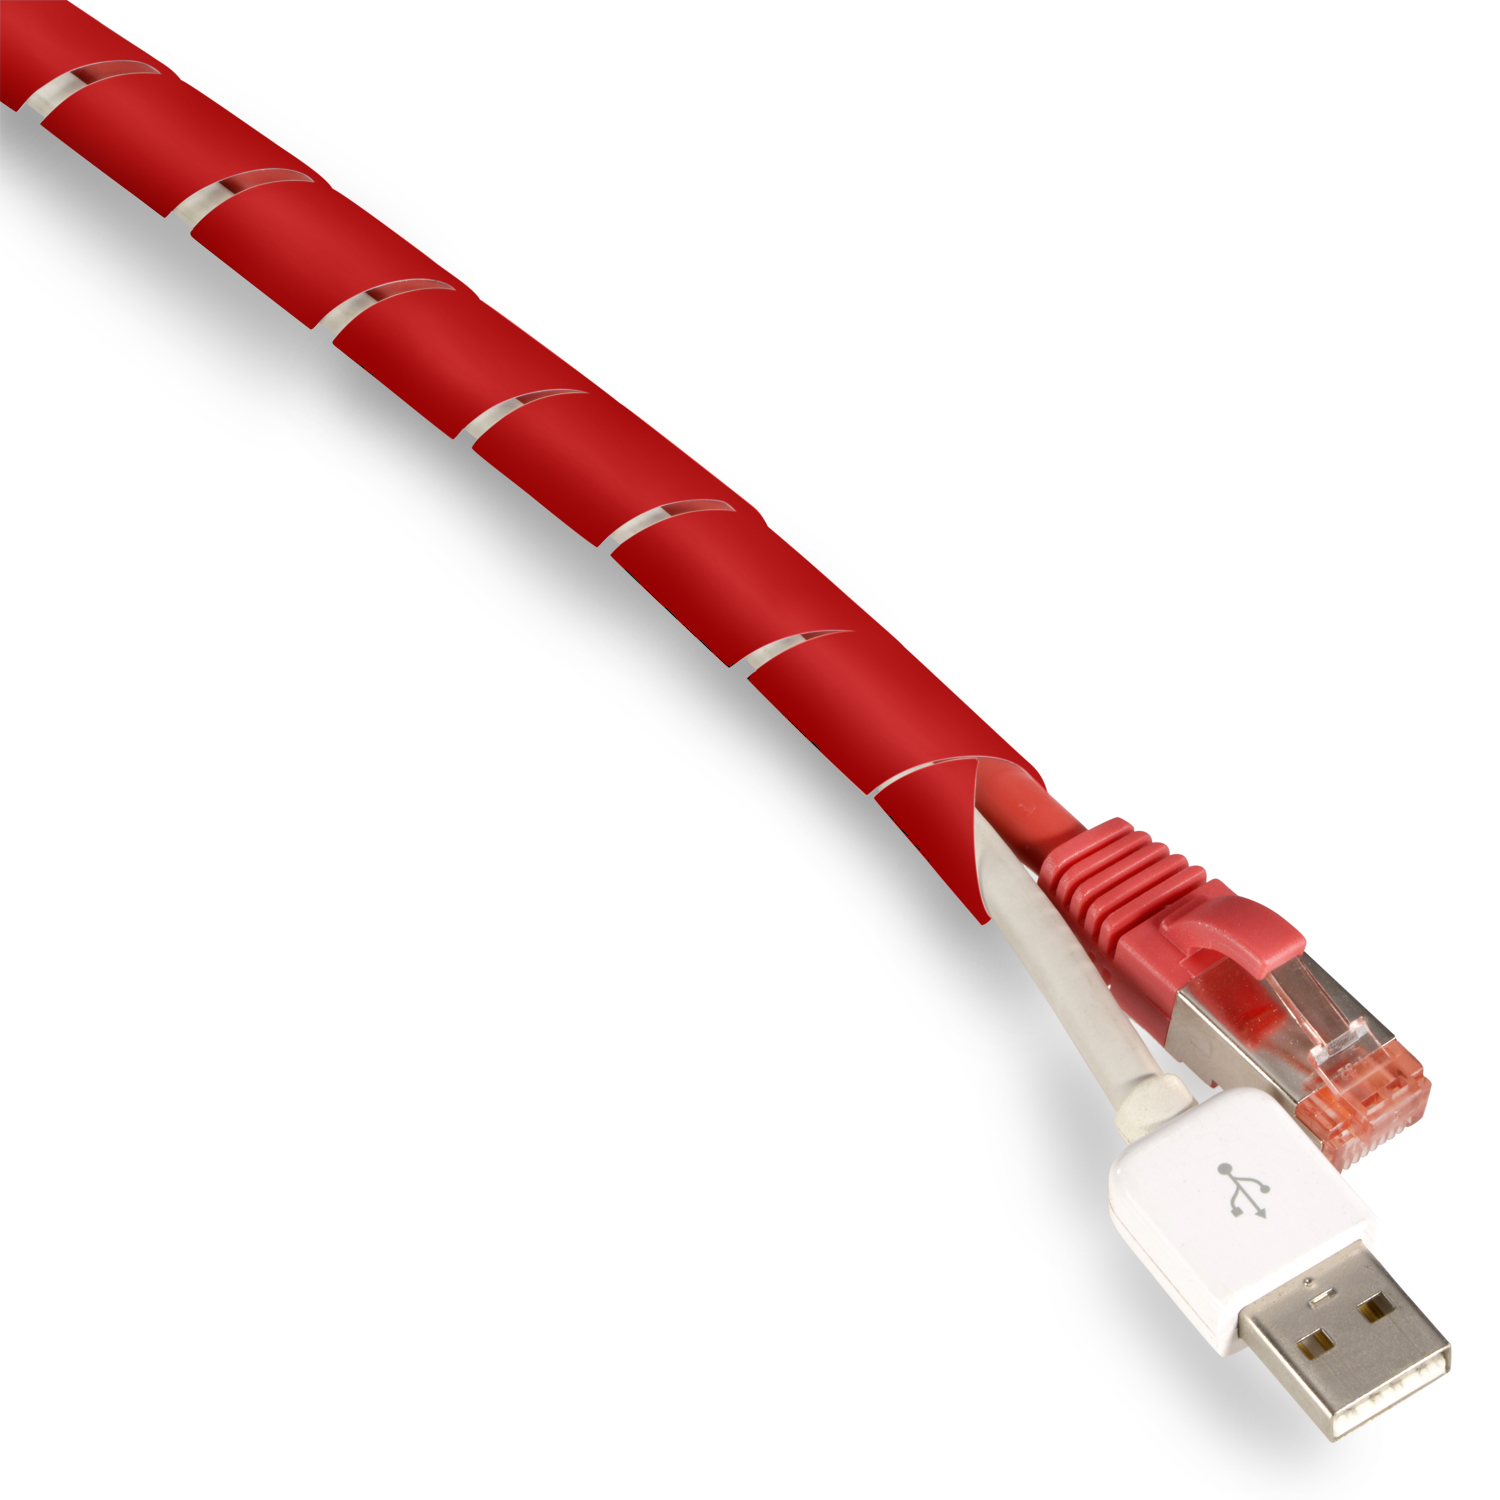 TPFNET Premium Spiral-Kabelschlauch 12-75mm, Rot, 10m Rot Kabelschlauch